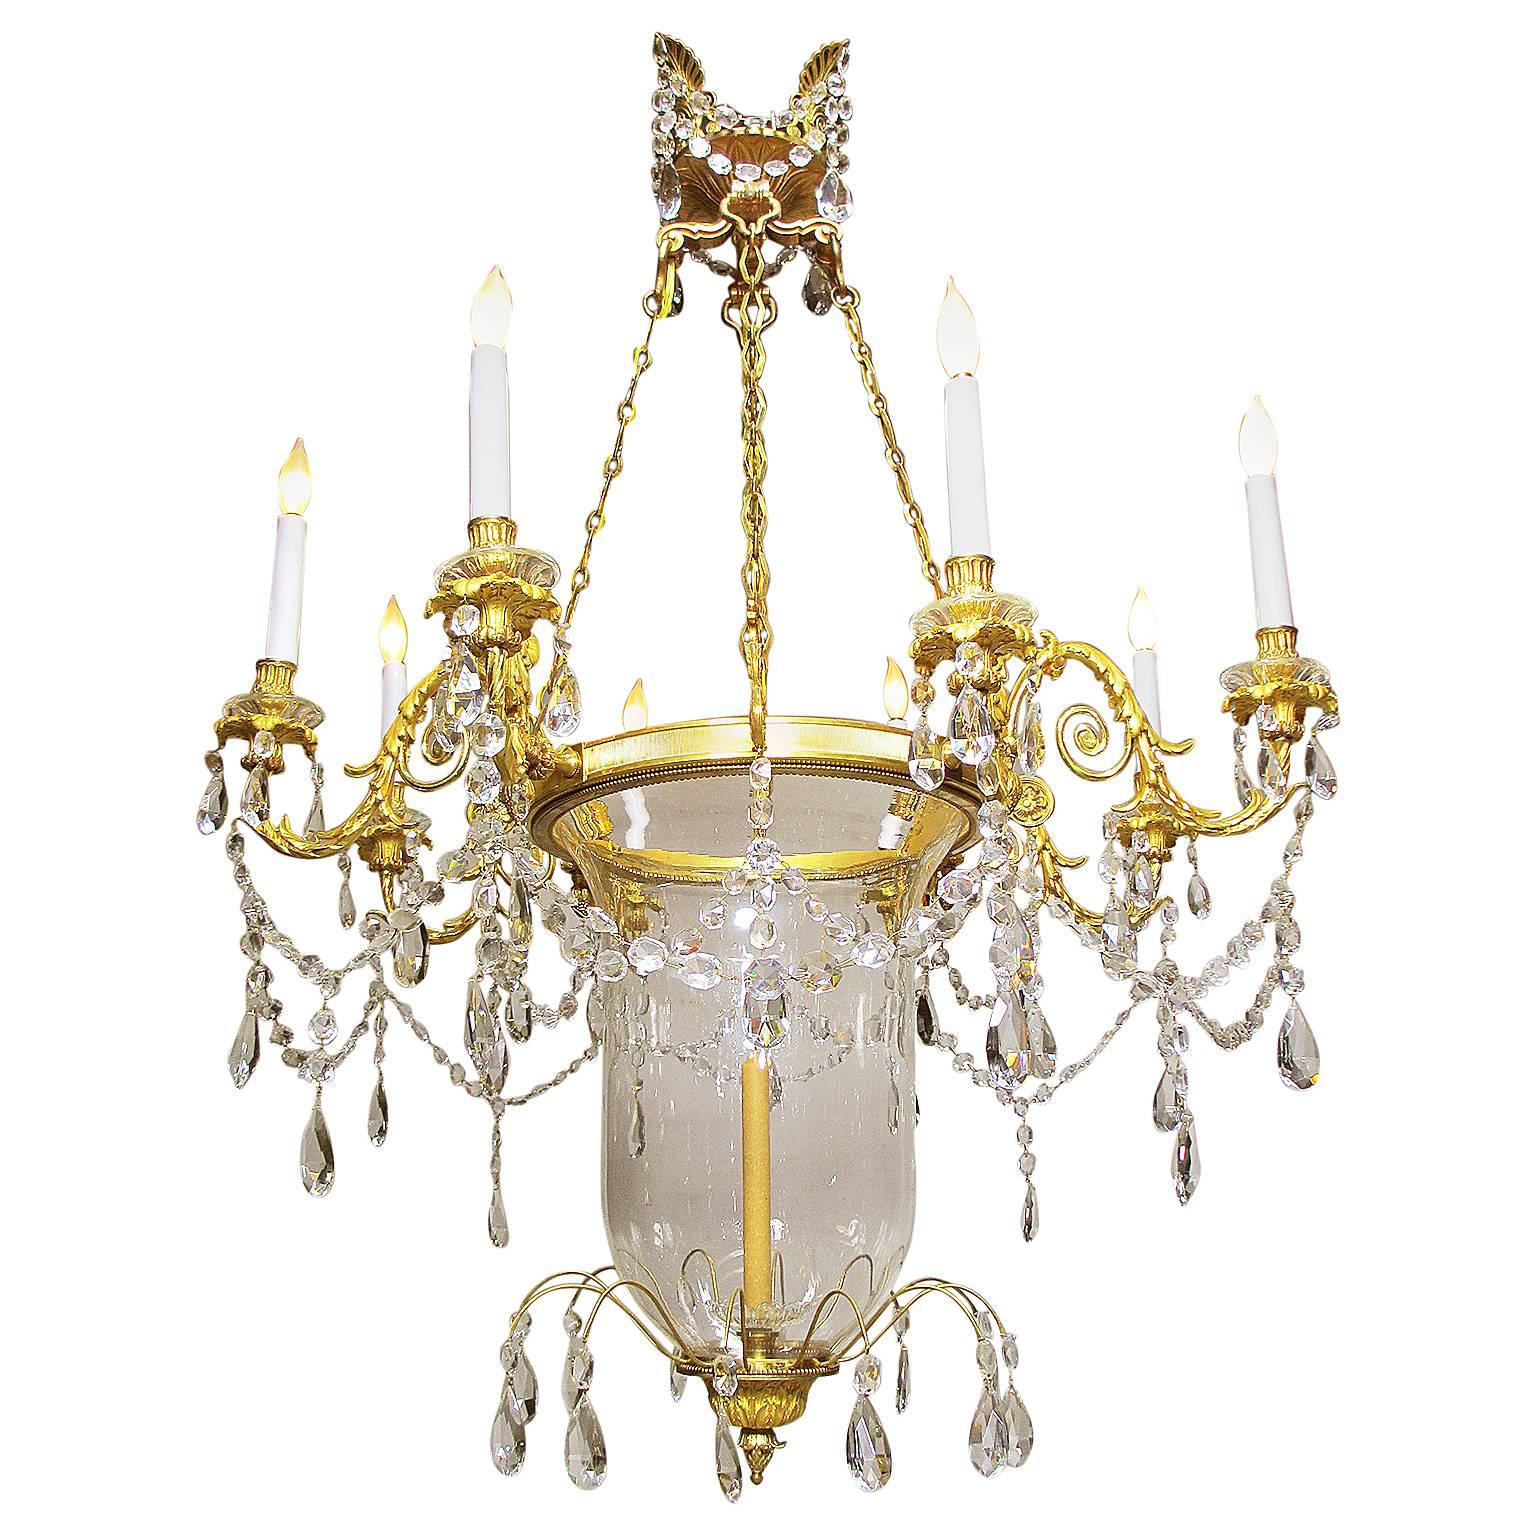 19th Century Louis XV Style Ormolu and Cut-Glass Chandelier by Mottheau et Fils For Sale